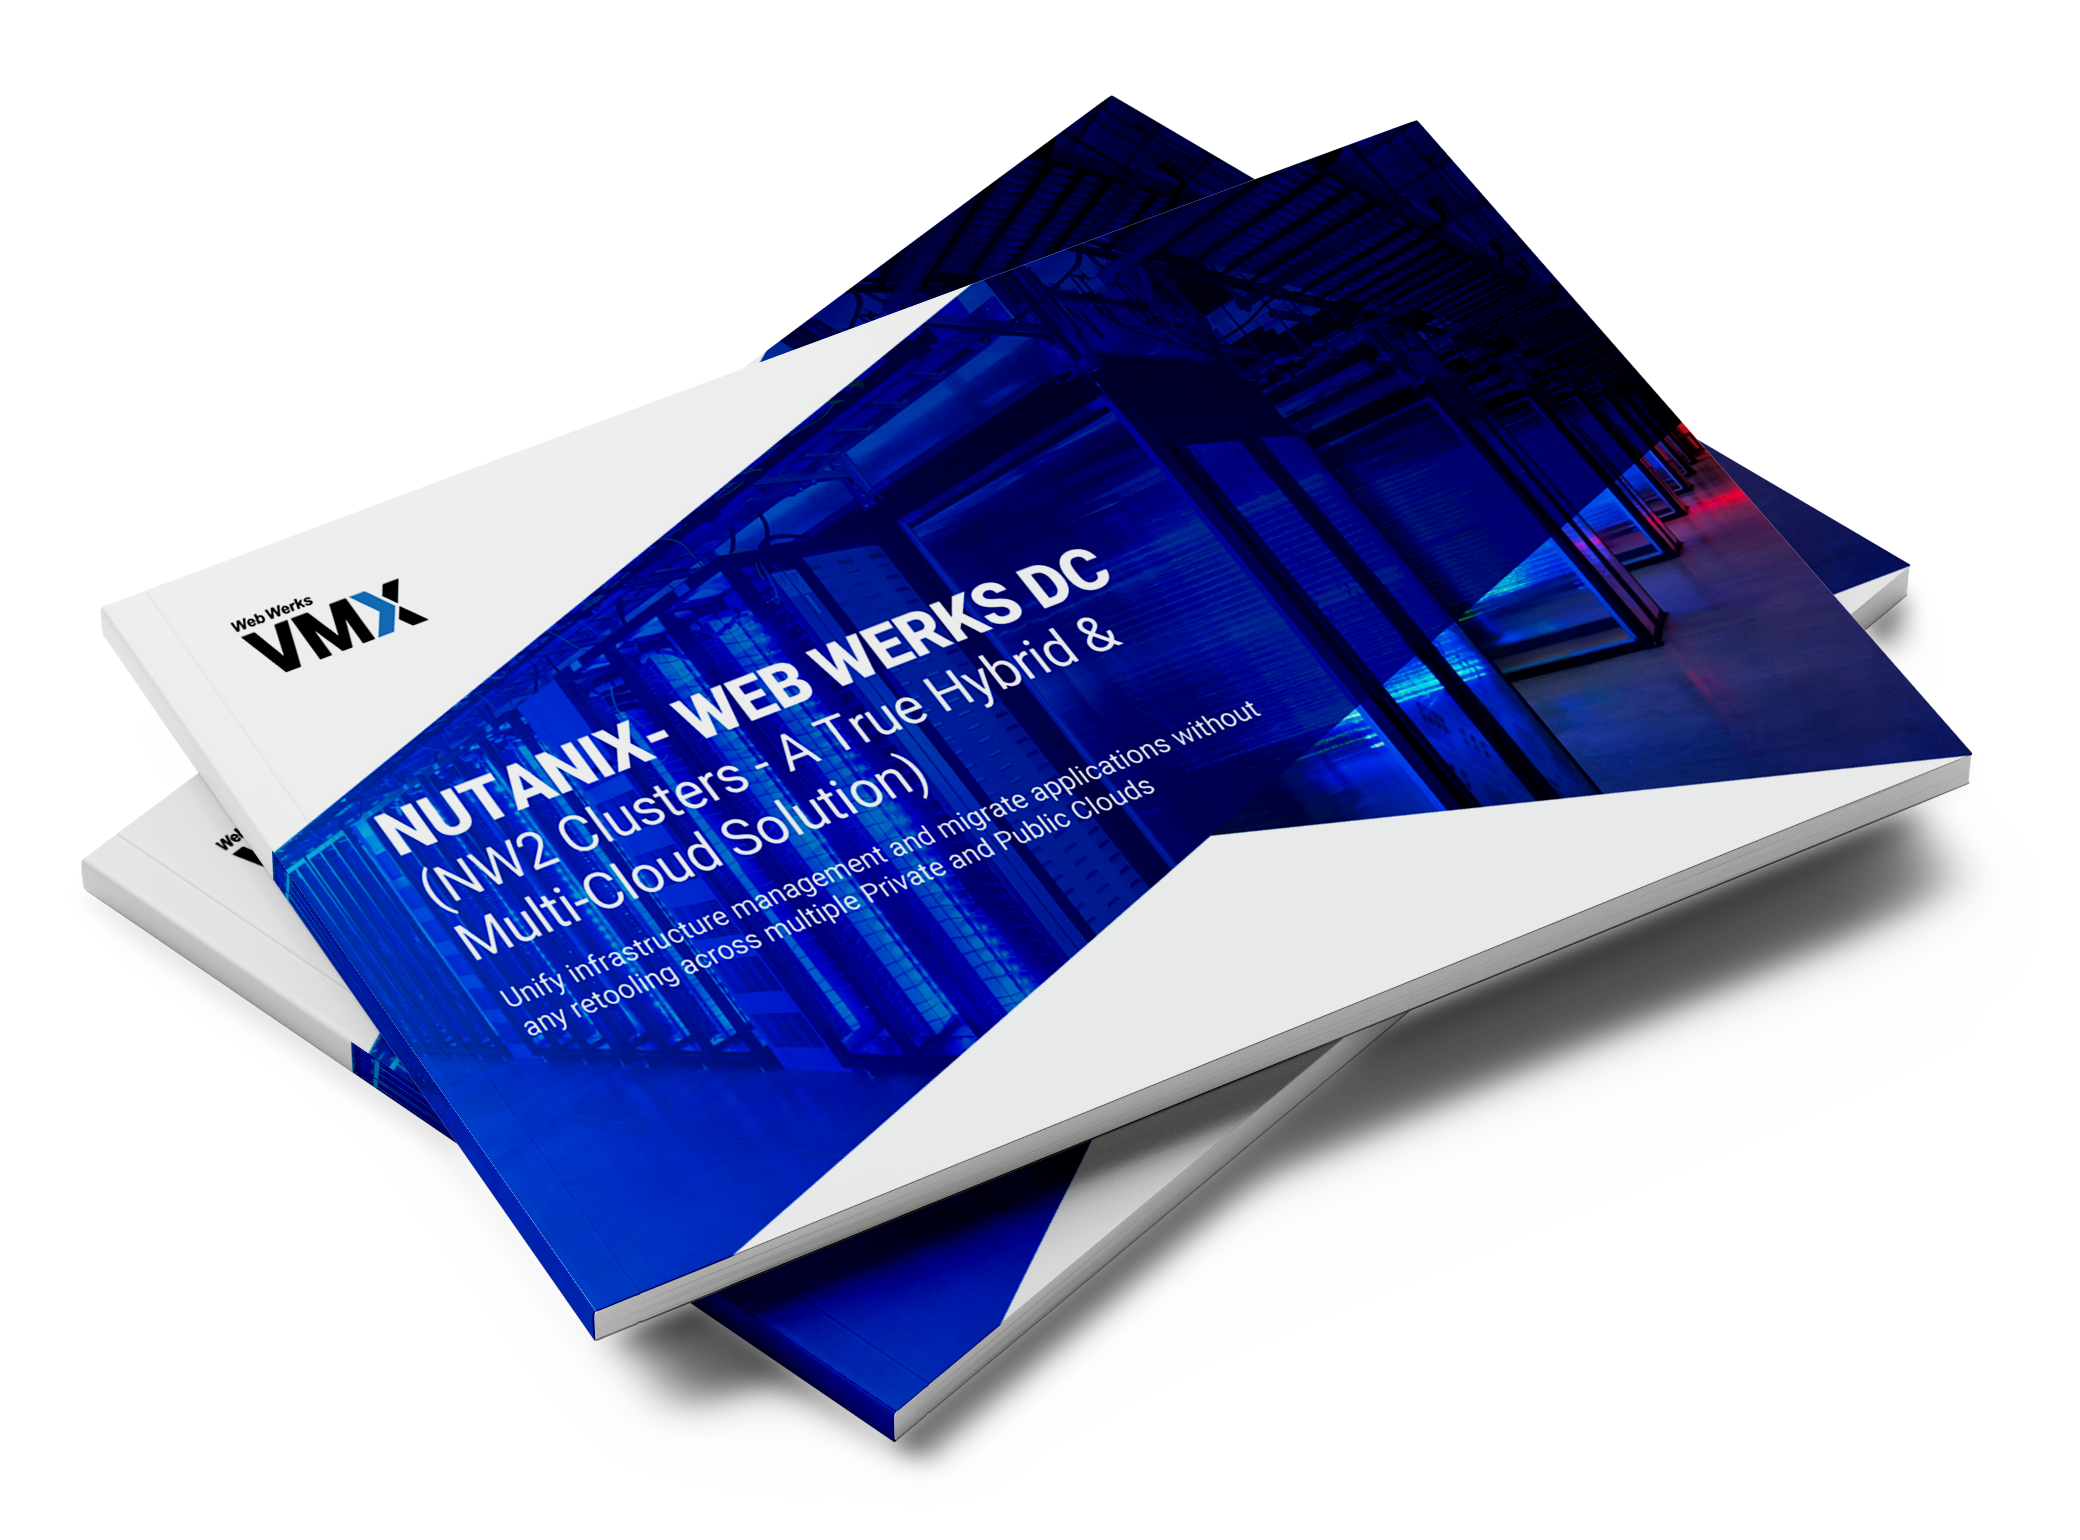 Nutanix- Web Werks DC (NW2 Clusters - A True Hybrid & Multi-Cloud Solution)